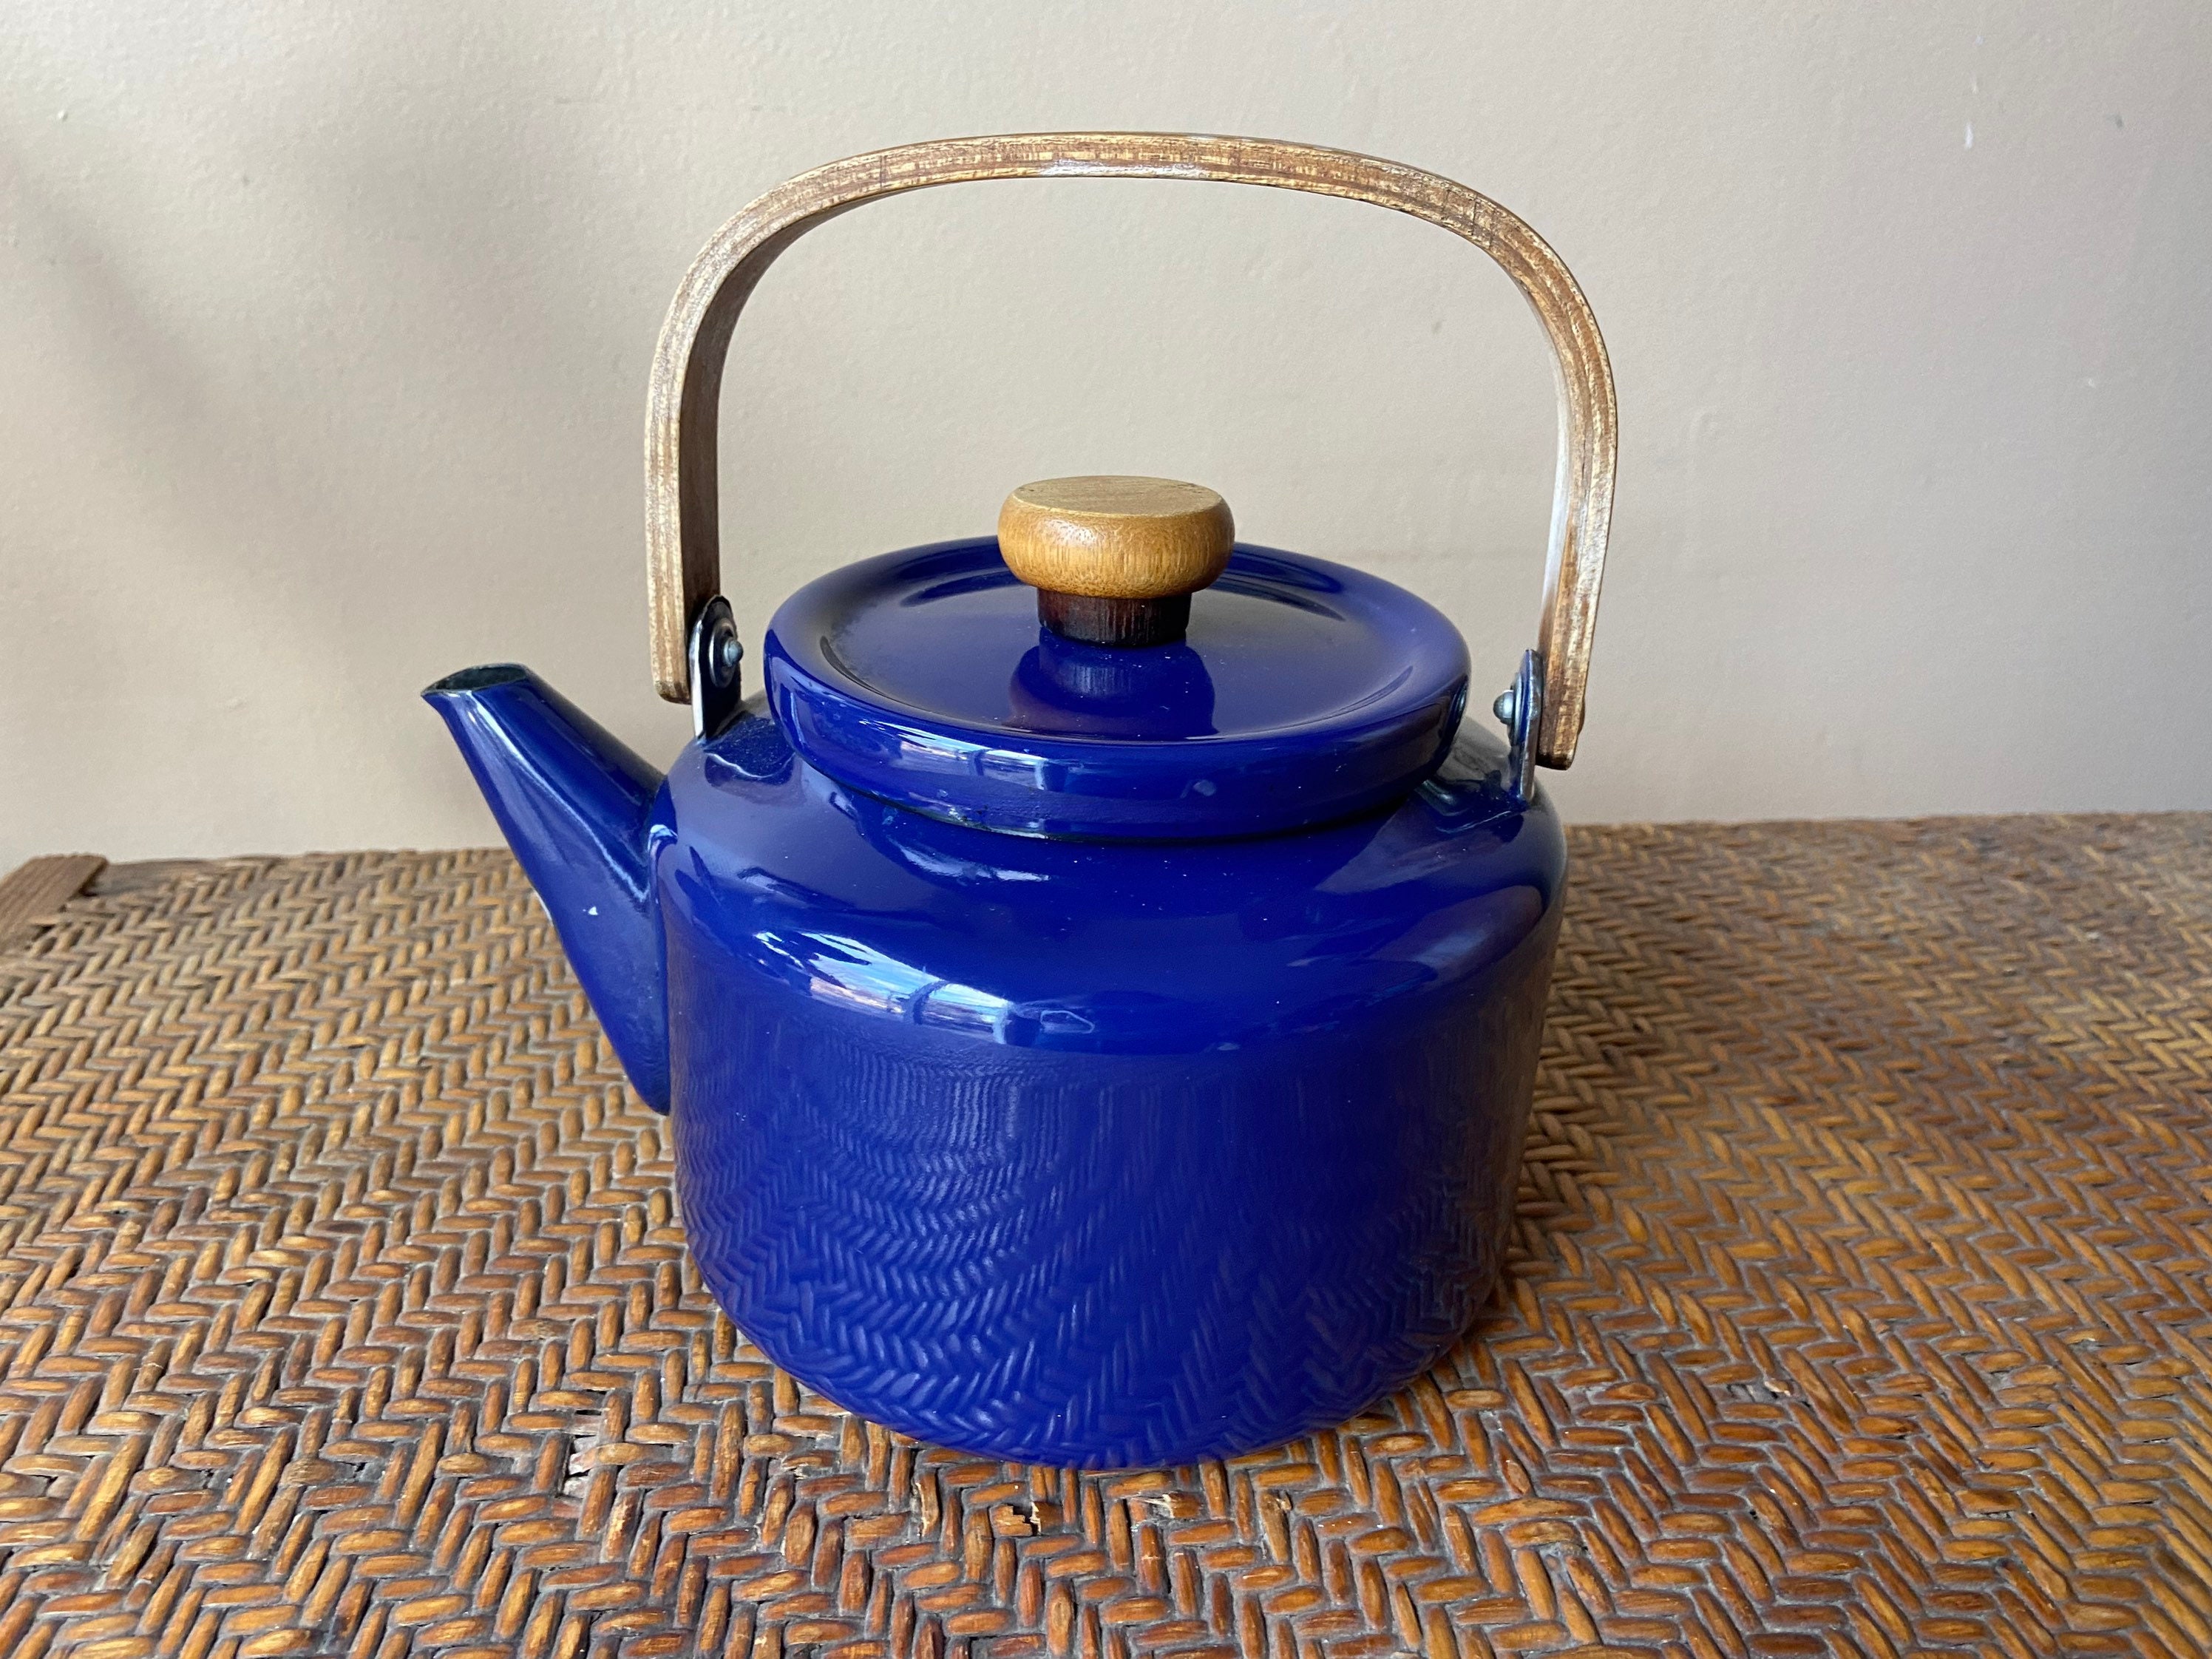 Vintage Blue Tea Kettle With White Flower, Tea Kettle, Antique Tea Kettle,  Enamel Teapot, Small Teapot, Stovetop Kettle, Vintage Tea Kettle. 